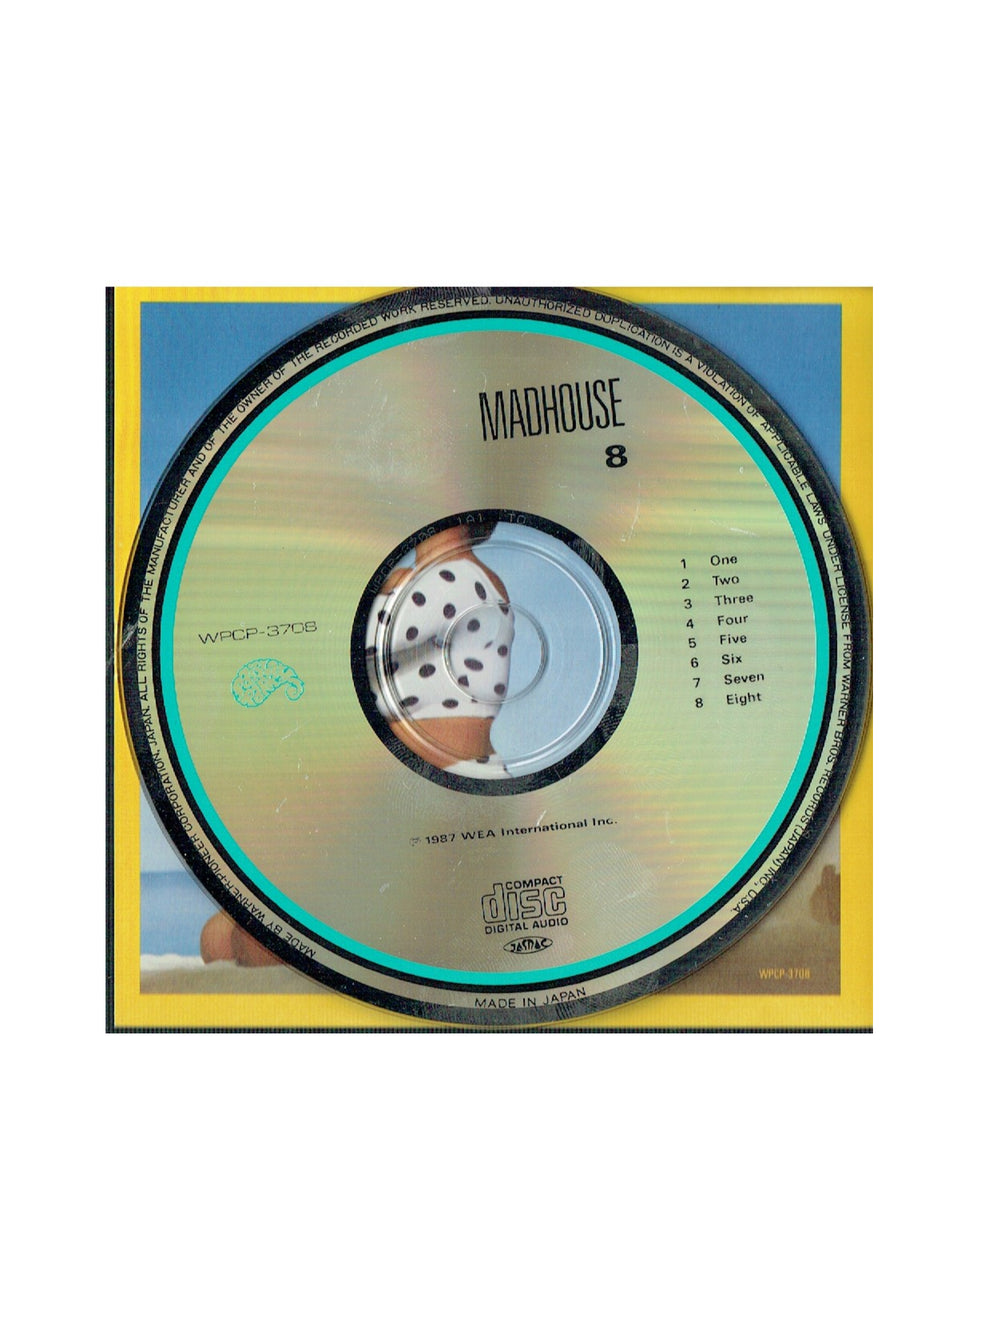 Prince – Madhouse 8 CD Album 8 Tracks Original JAPAN Release With OBI Prince